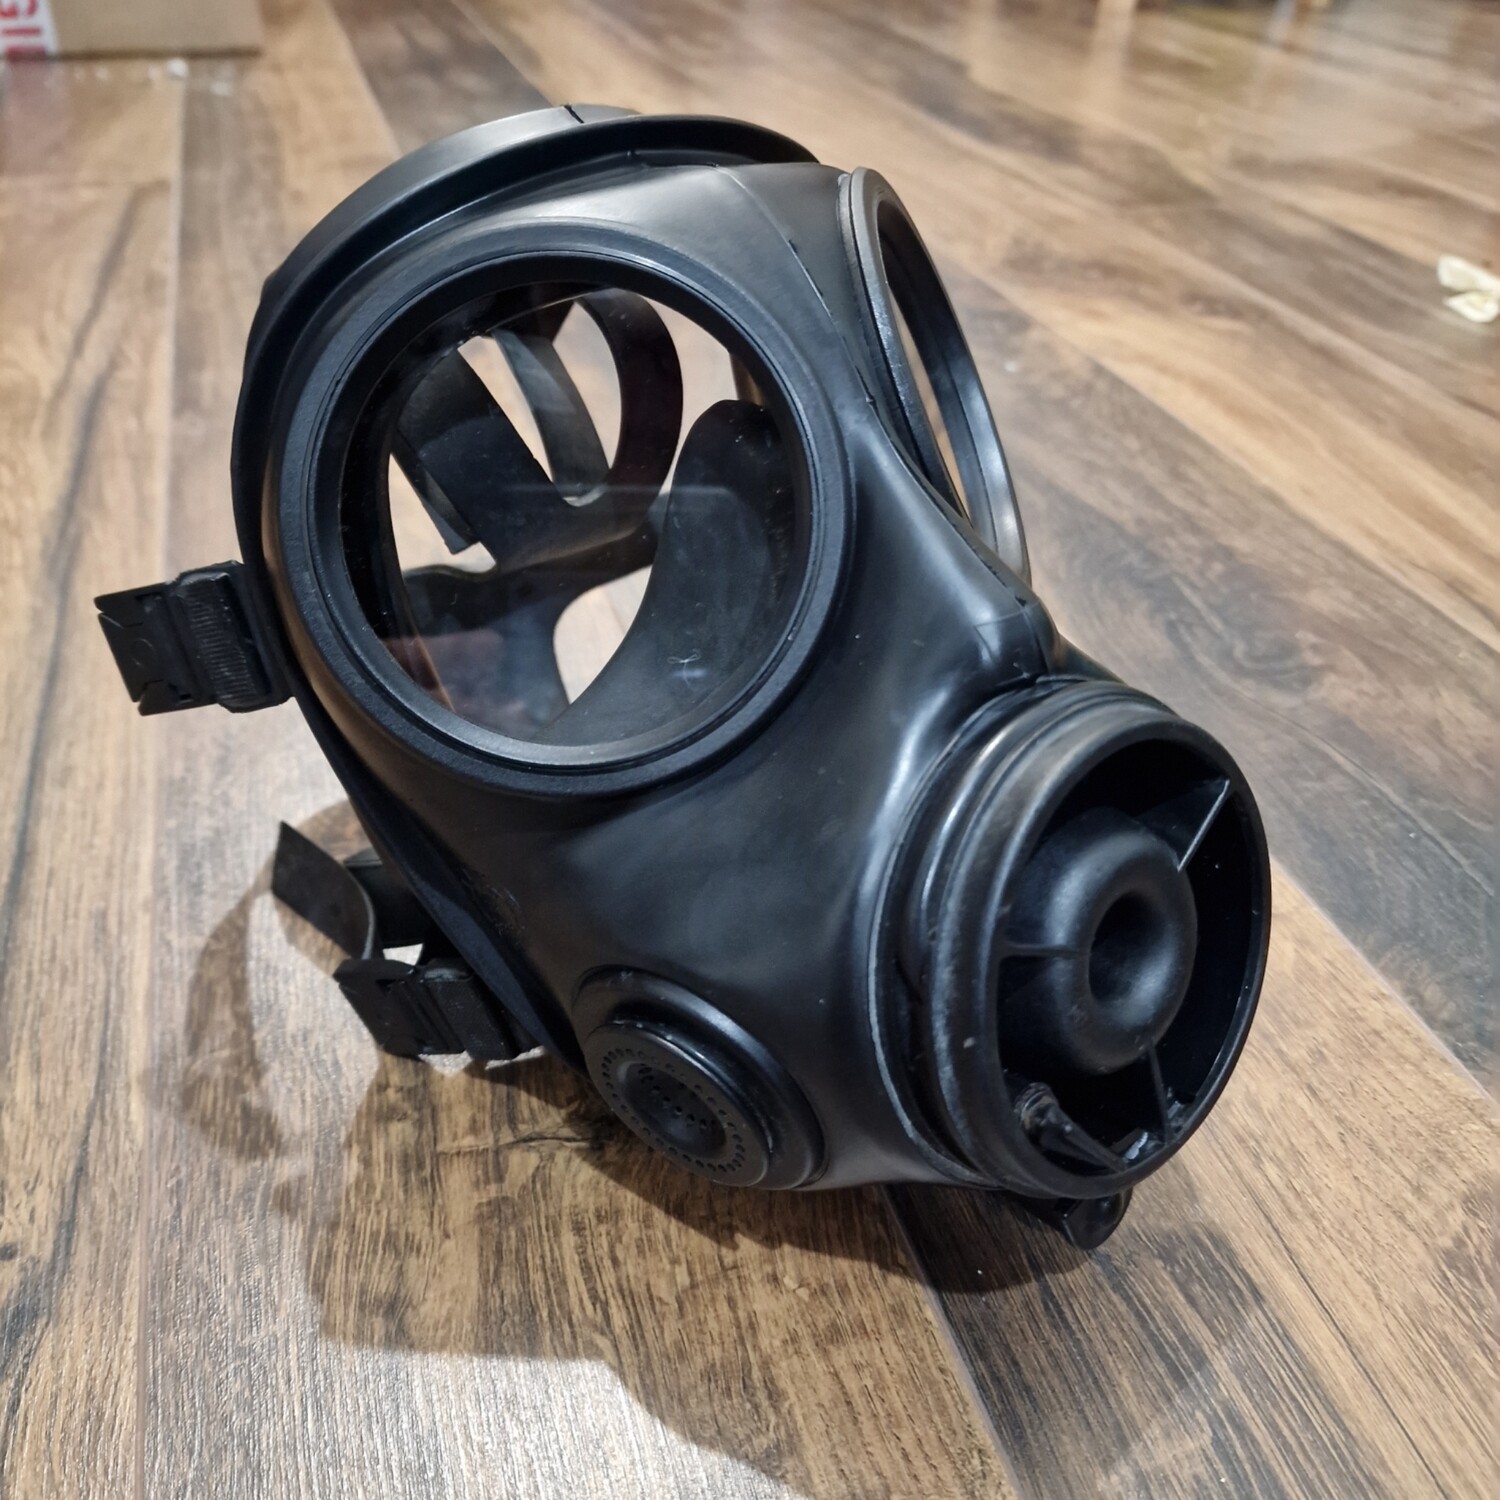 Avon S10 Gas Mask Size 2 (Large)